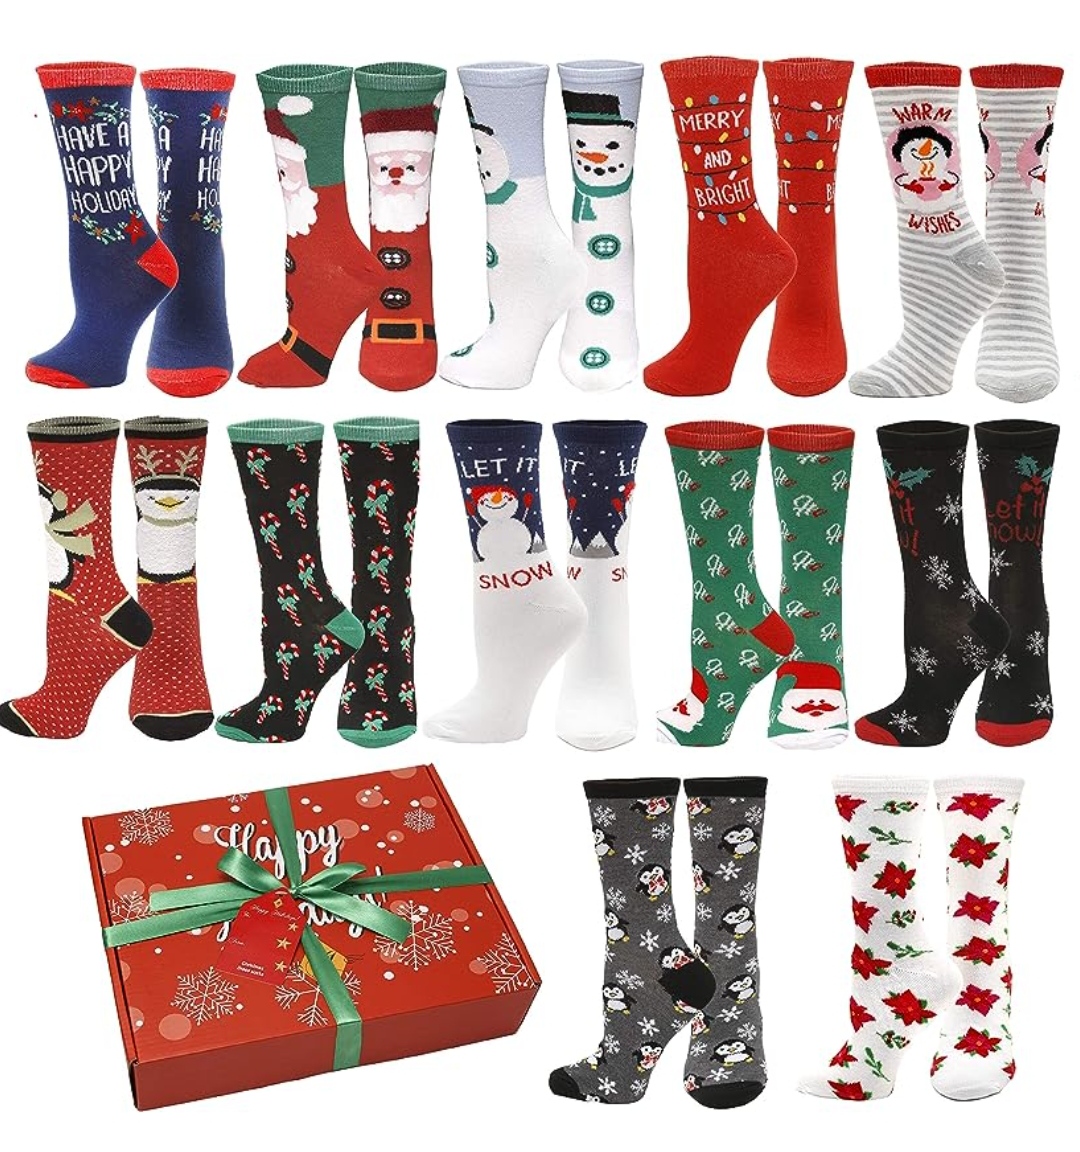 gilbins 12 pair holiday xmas socks the top 14 funny 12 days of christmas gift ideas